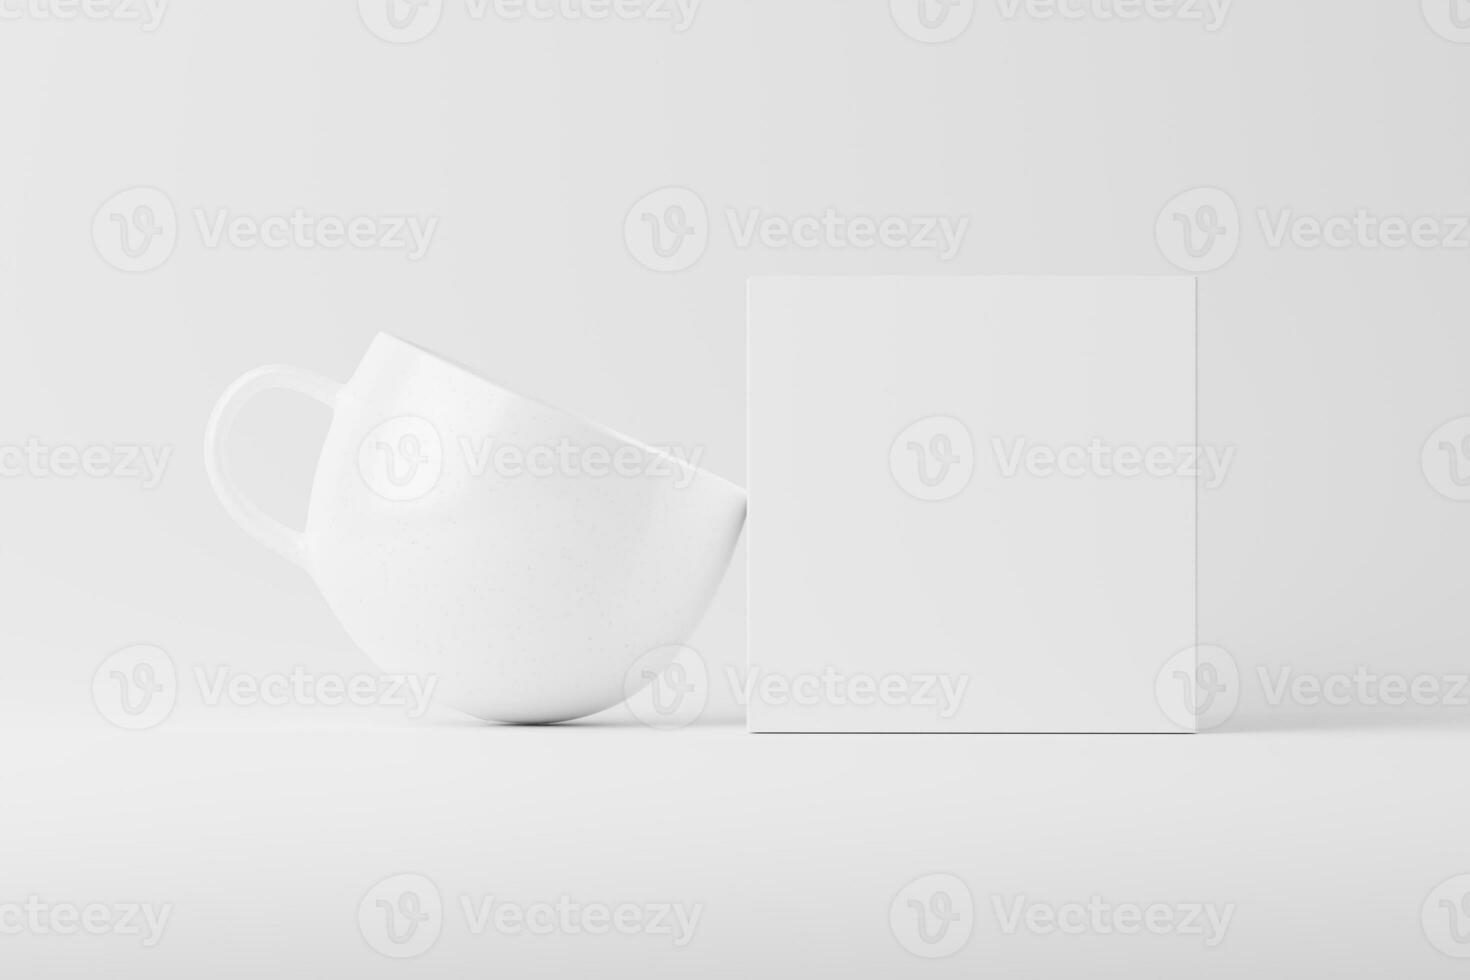 Ceramic Mug Cup For Coffee Tea White Blank 3D Rendering Mockup photo